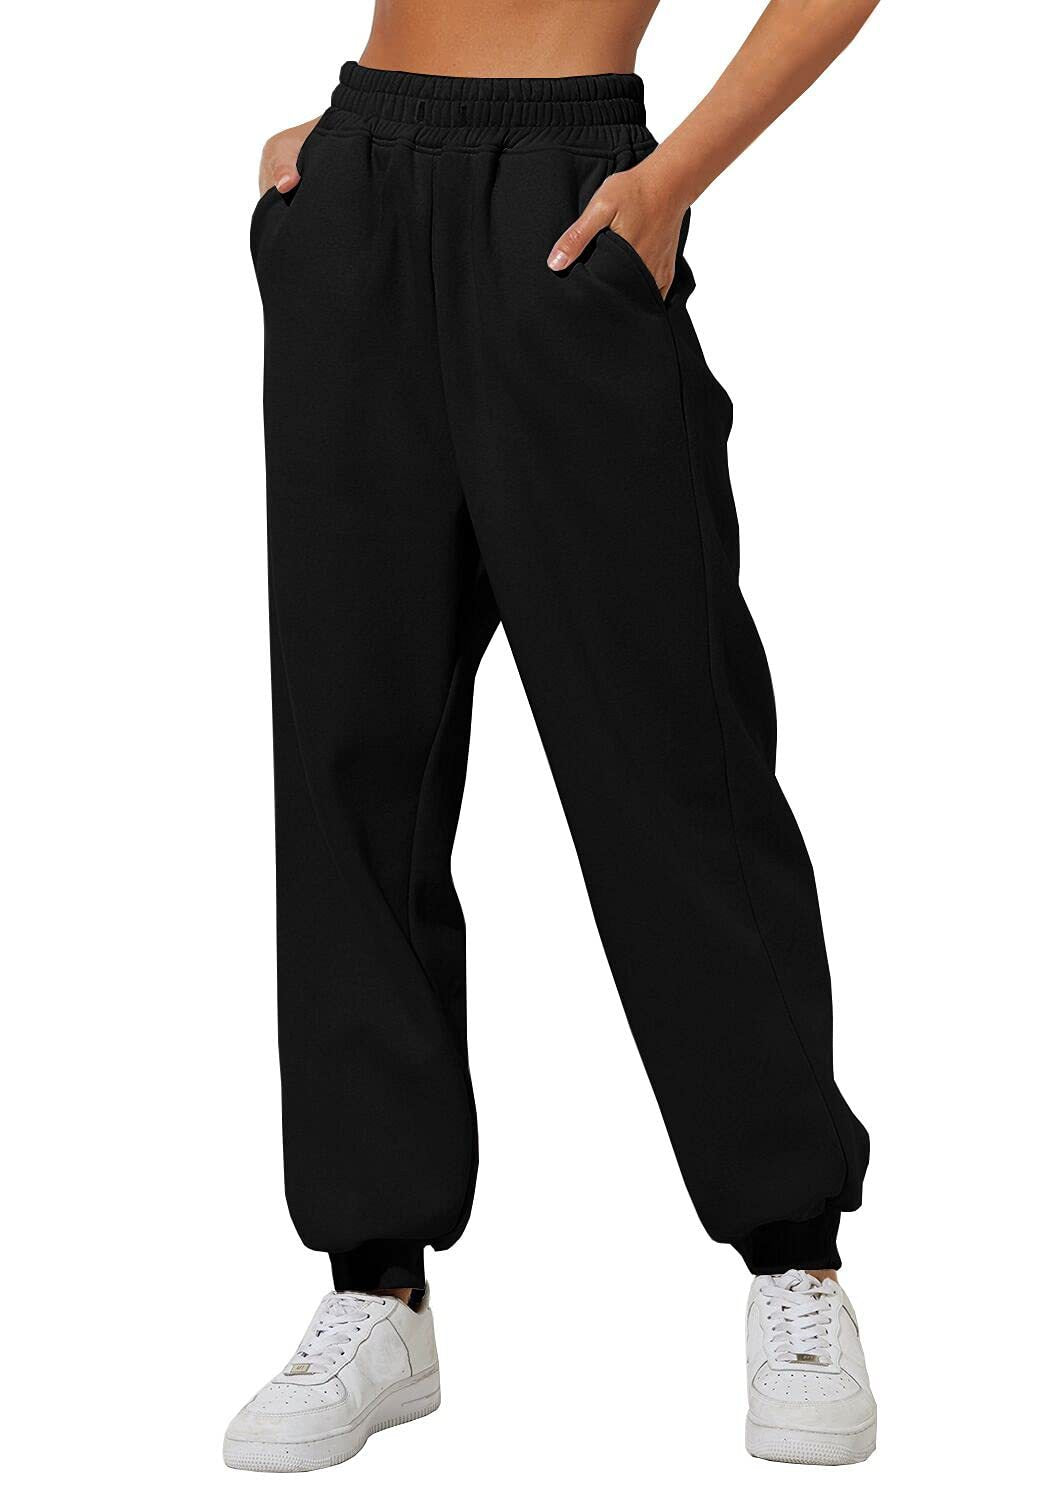 Women's Jogger Sweatpants - High-Waisted Drawstring Lounge Pants with Pockets - Black - Pants & Capris - Carvan Mart